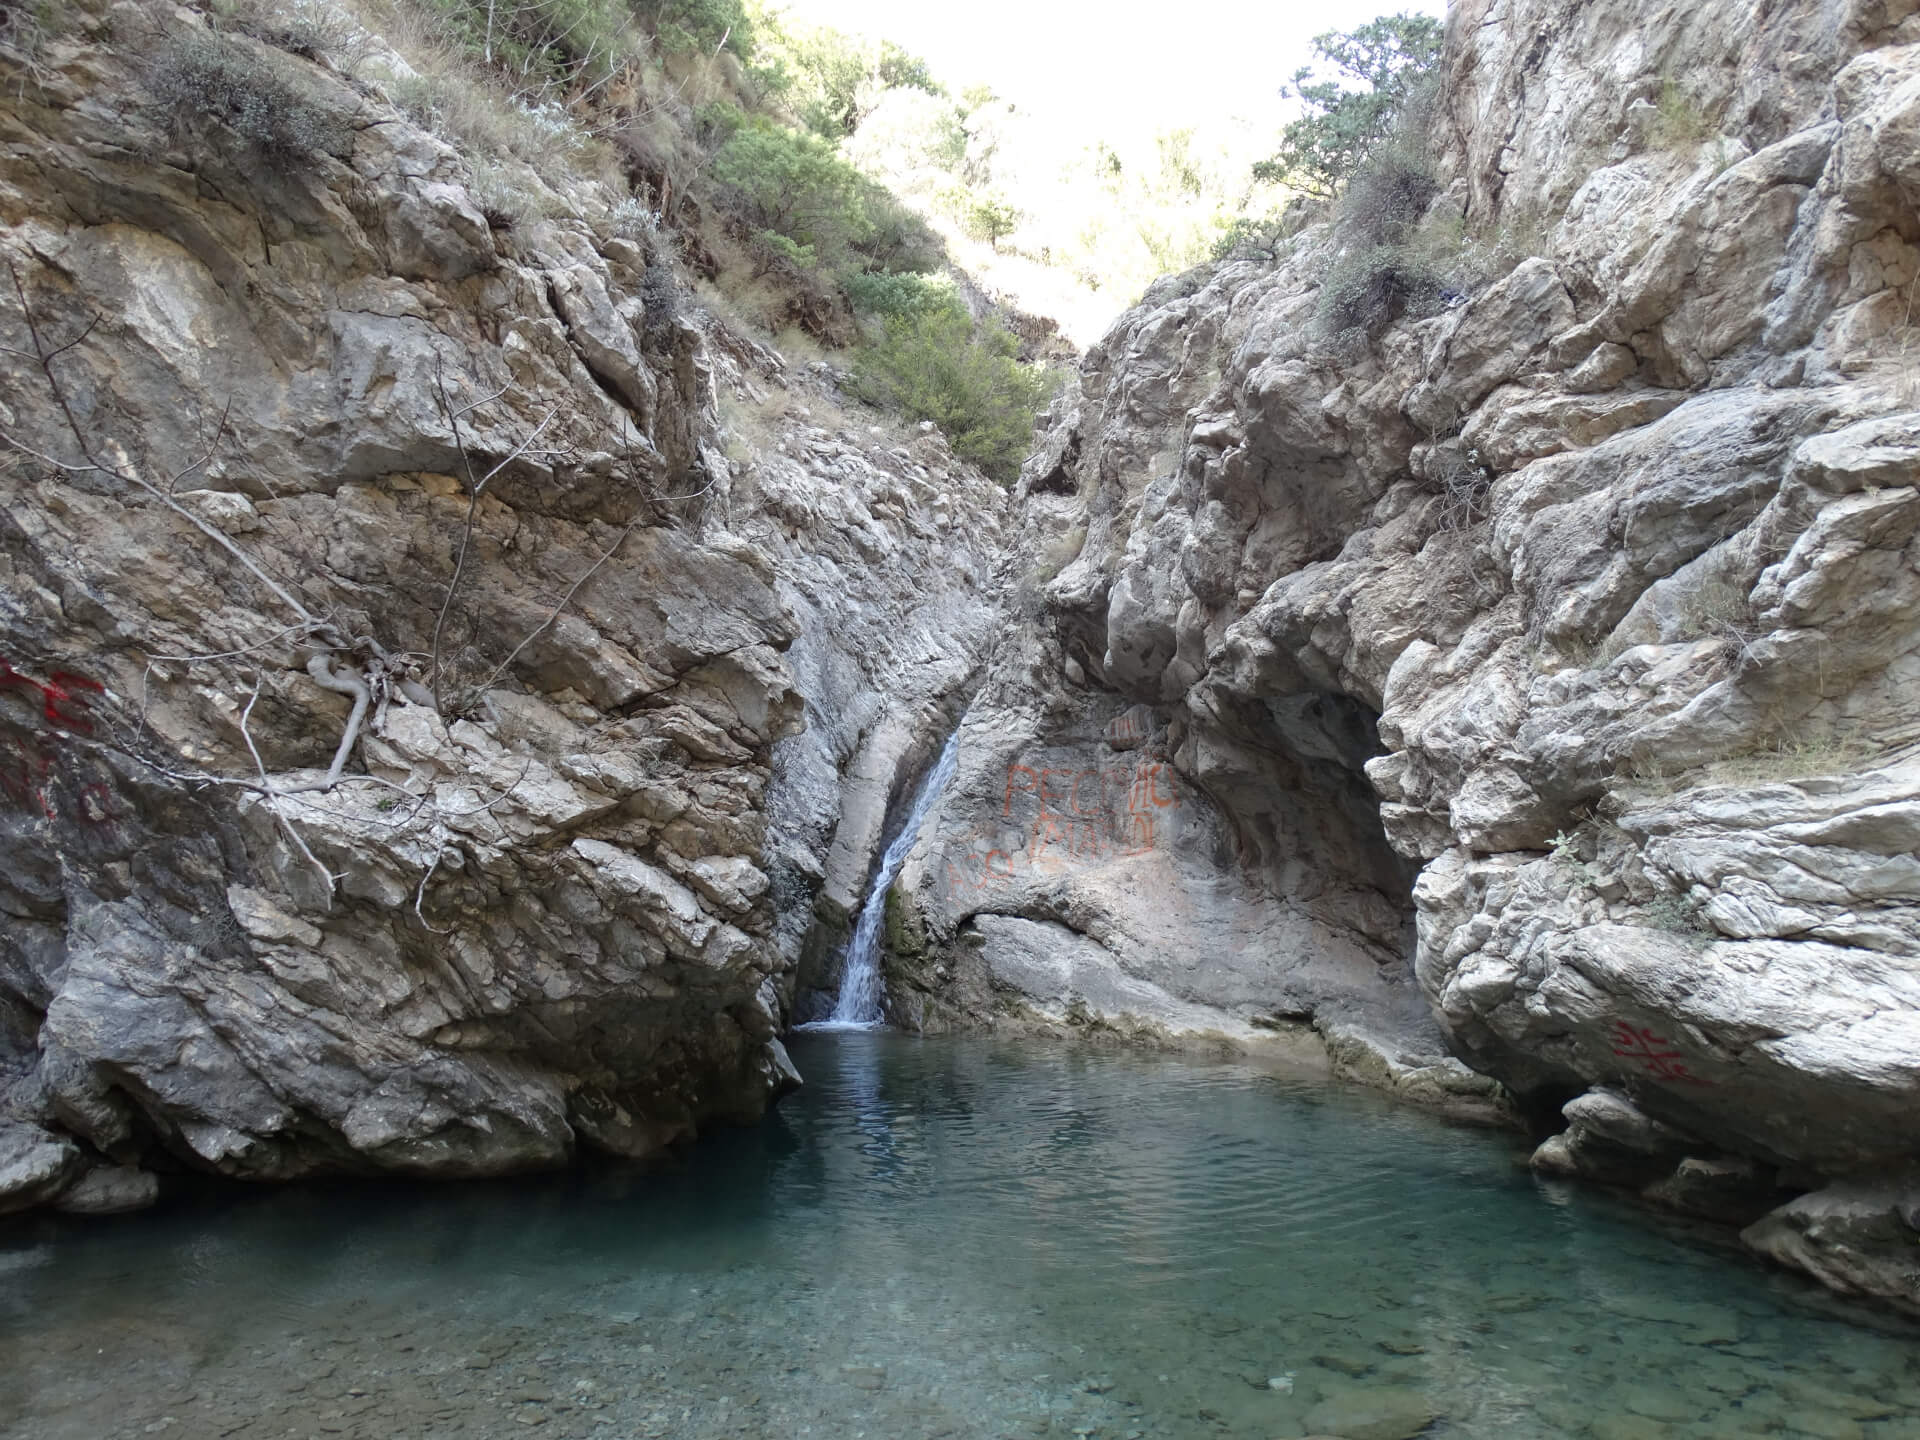 Bar Waterfall with clear beautiful water 1